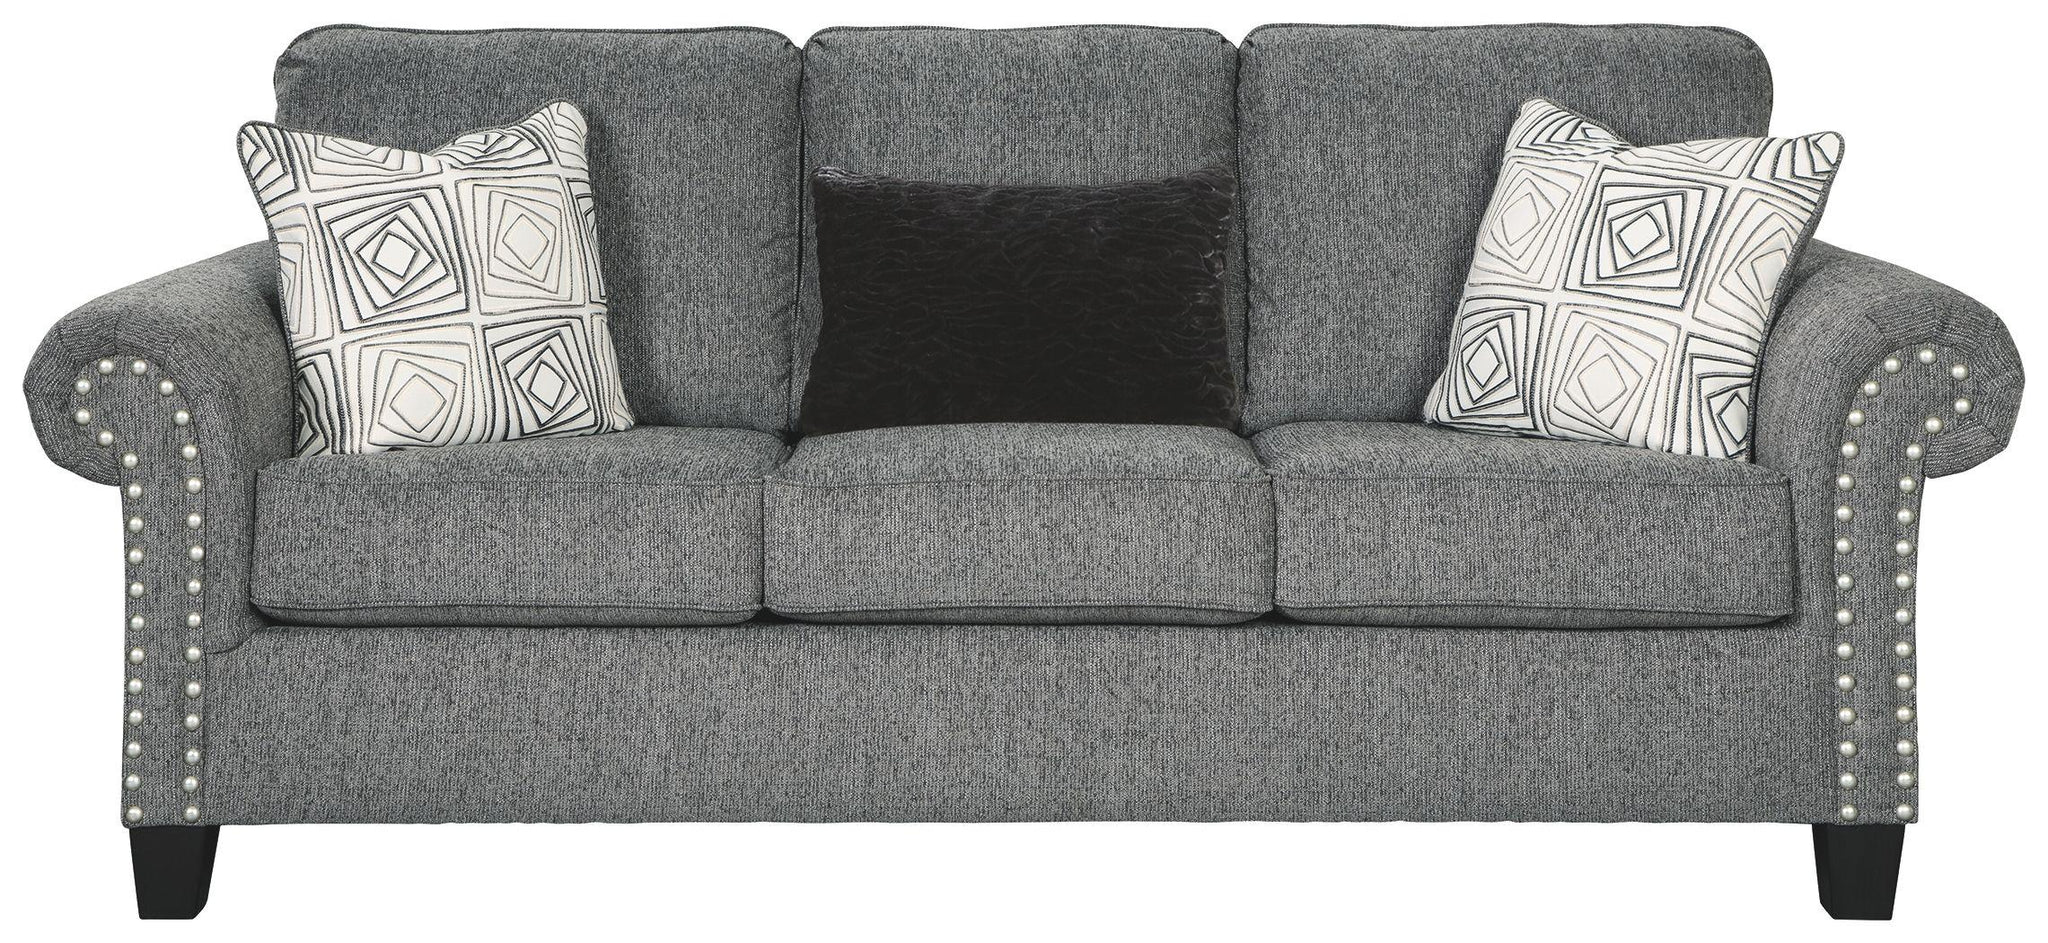 Agleno - Sofa image